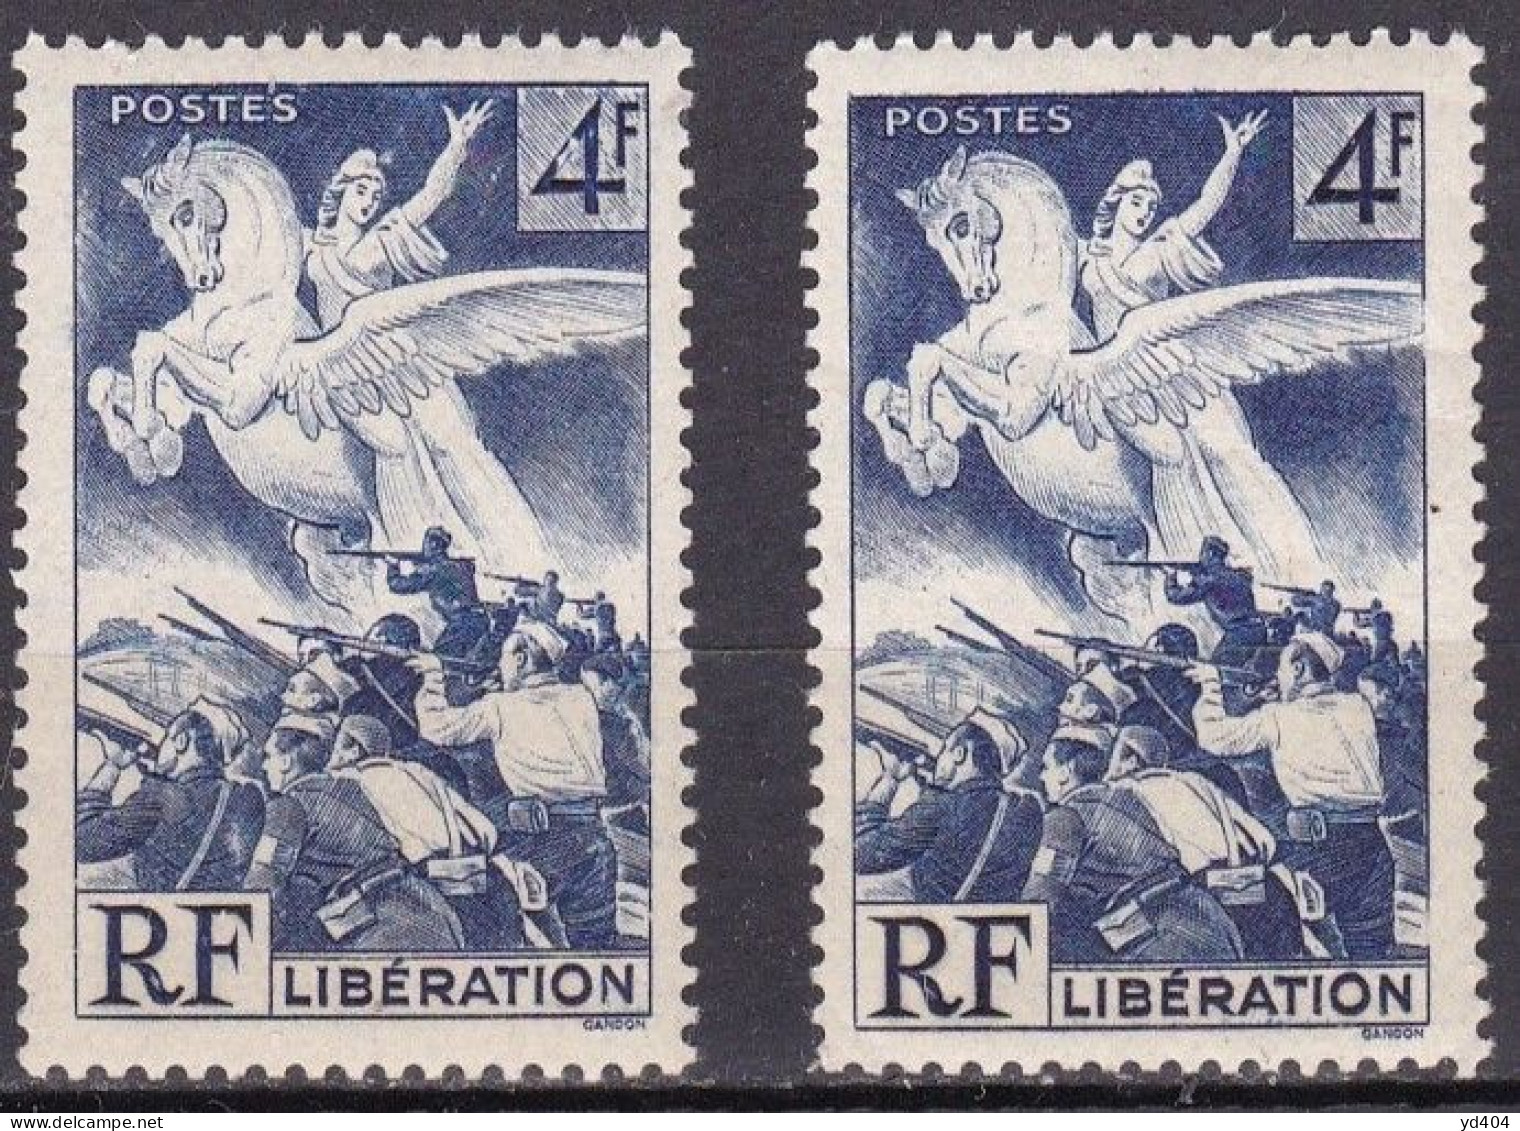 FR7112 - FRANCE – 1945 – LIBERATION - Y&T # 669a MNH - Nuovi